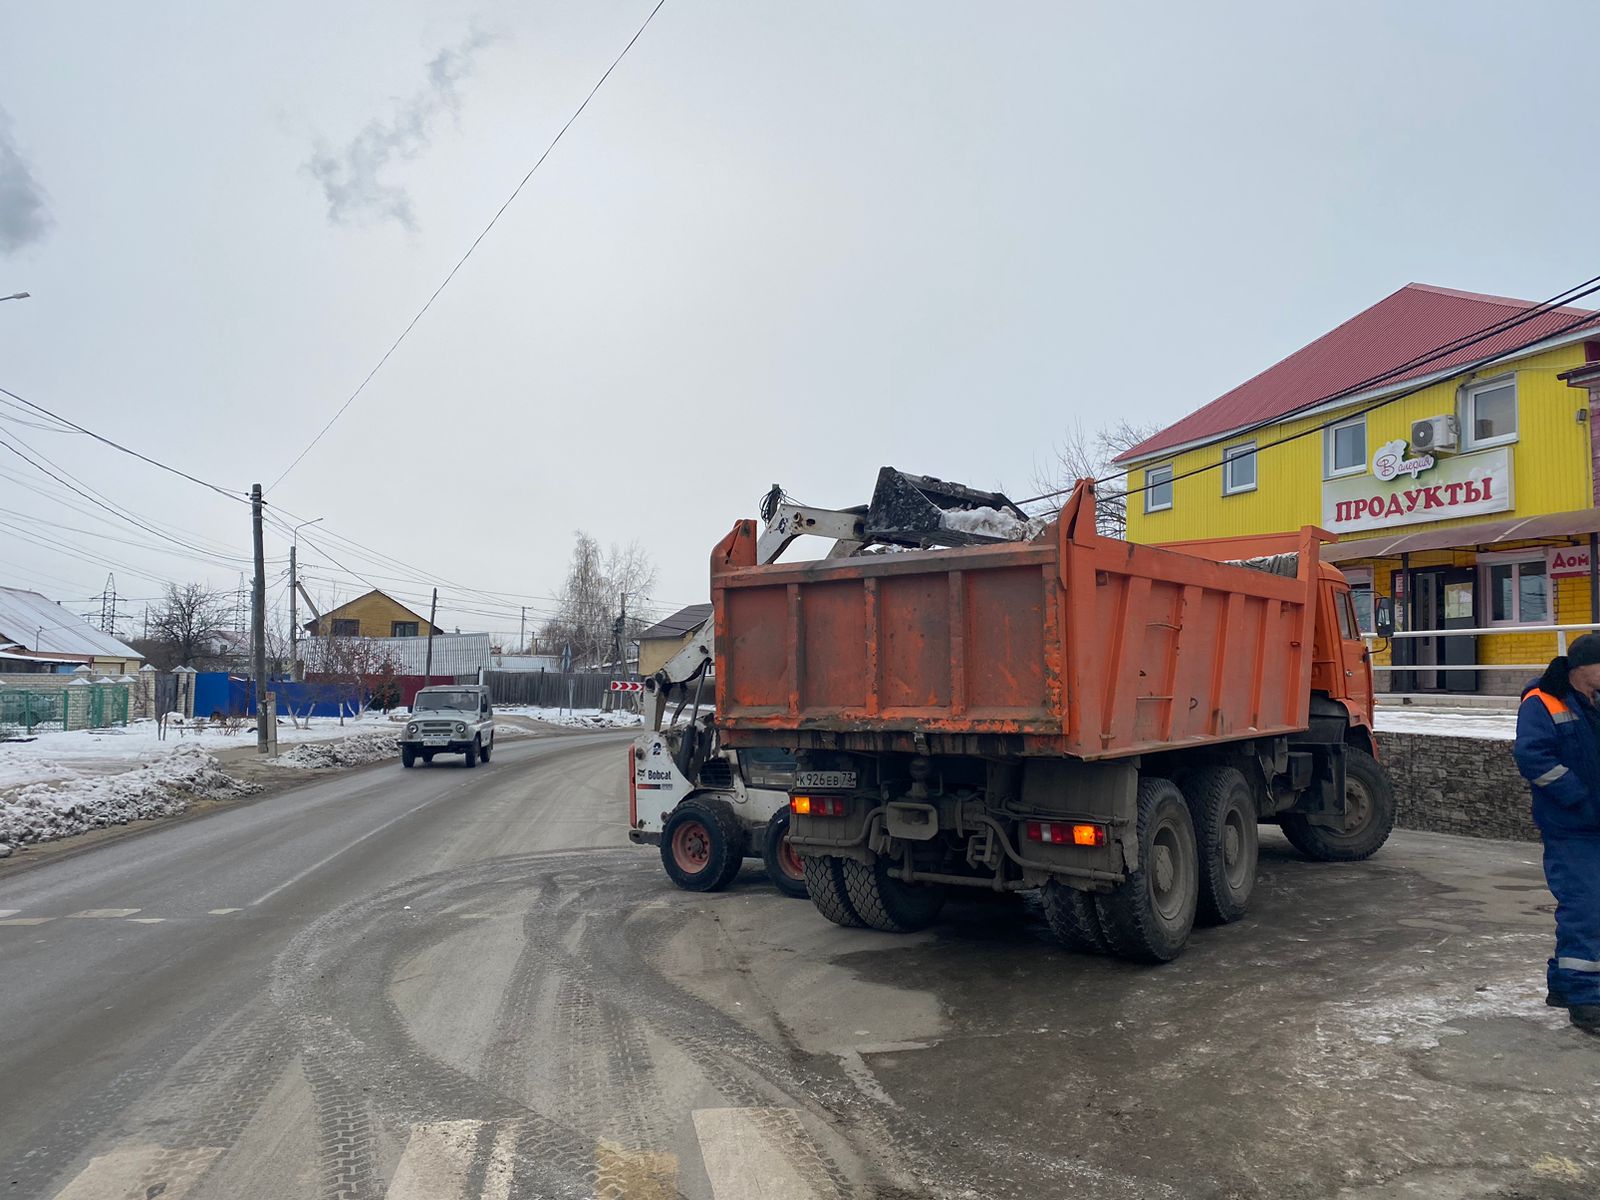 На вывоз снега и обработку тротуаров направлено 56 единиц спецтехники